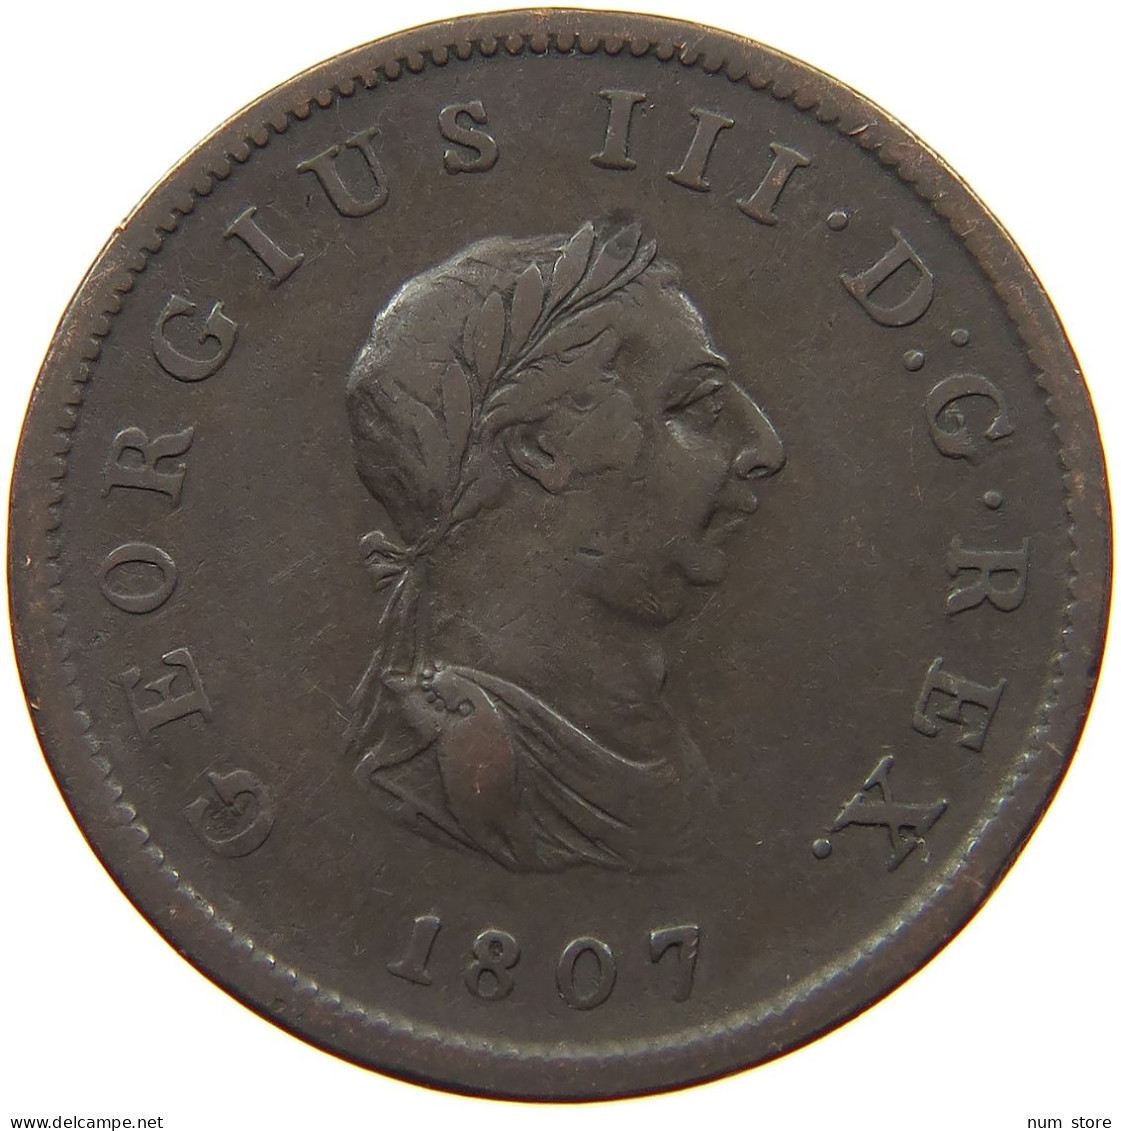 GREAT BRITAIN HALFPENNY 1806 GEORGE III. 1760-1820 #t145 0377 - B. 1/2 Penny